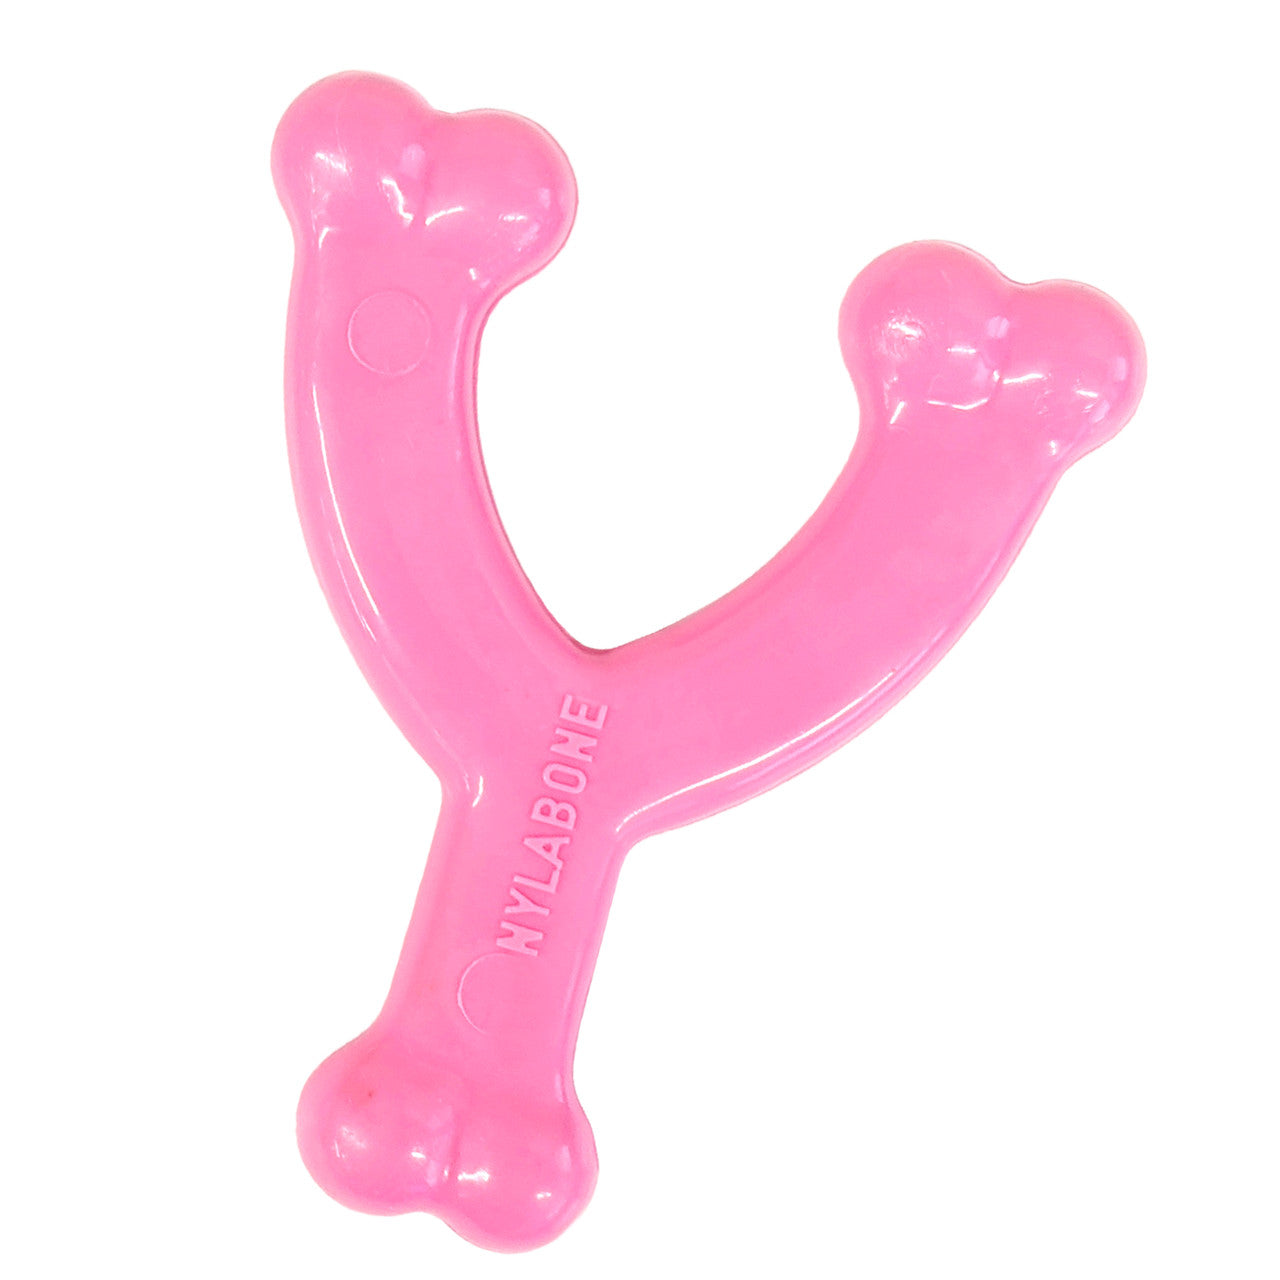 Nylabone Puppy Chew Toy Wishbone Chicken Pink X-Small/Petite (1 Count)